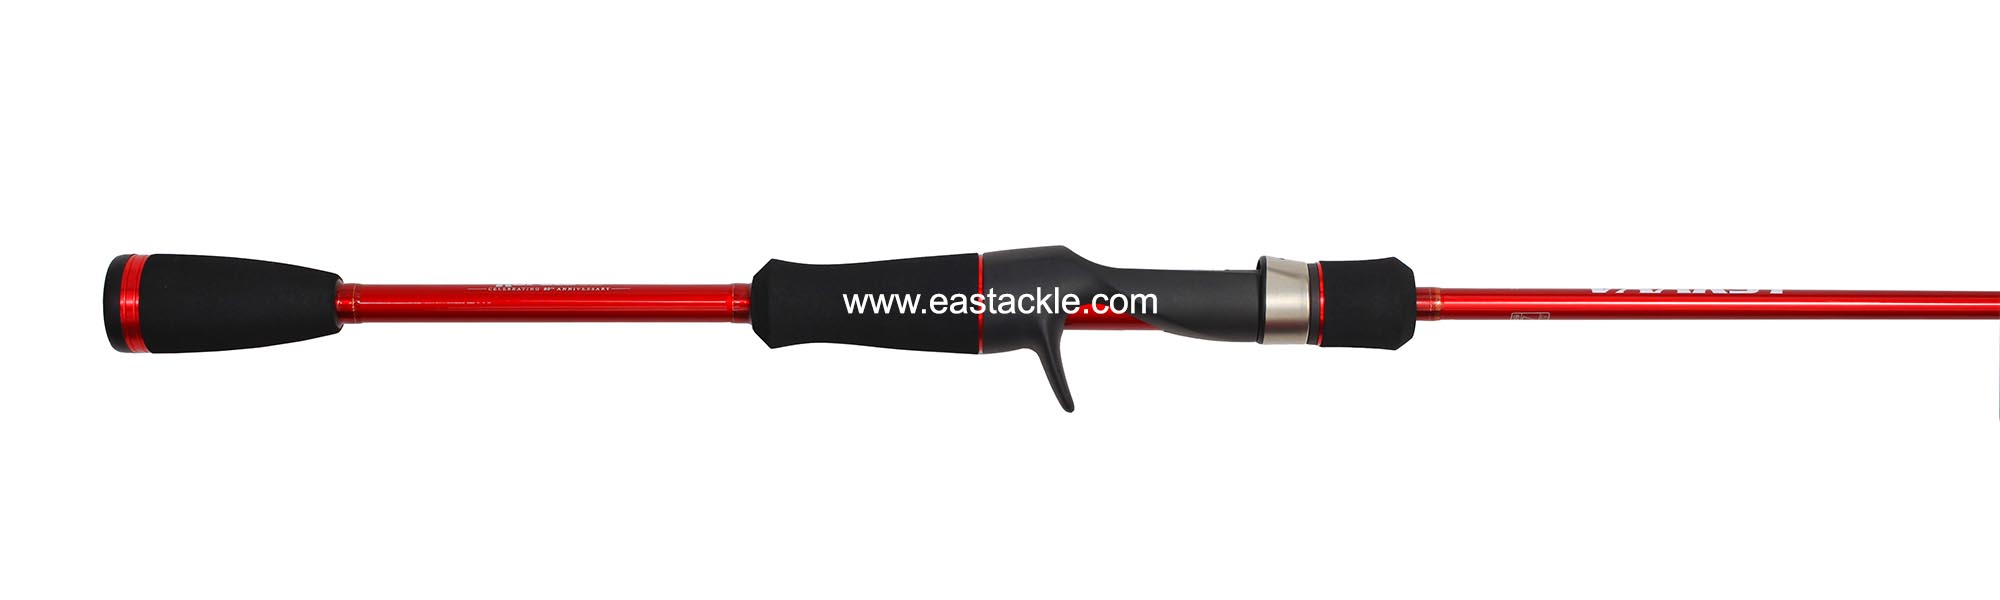 Rapala - Vaaksy - VAC662ML - Baitcasting Rod - Handle Section (Side View) | Eastackle